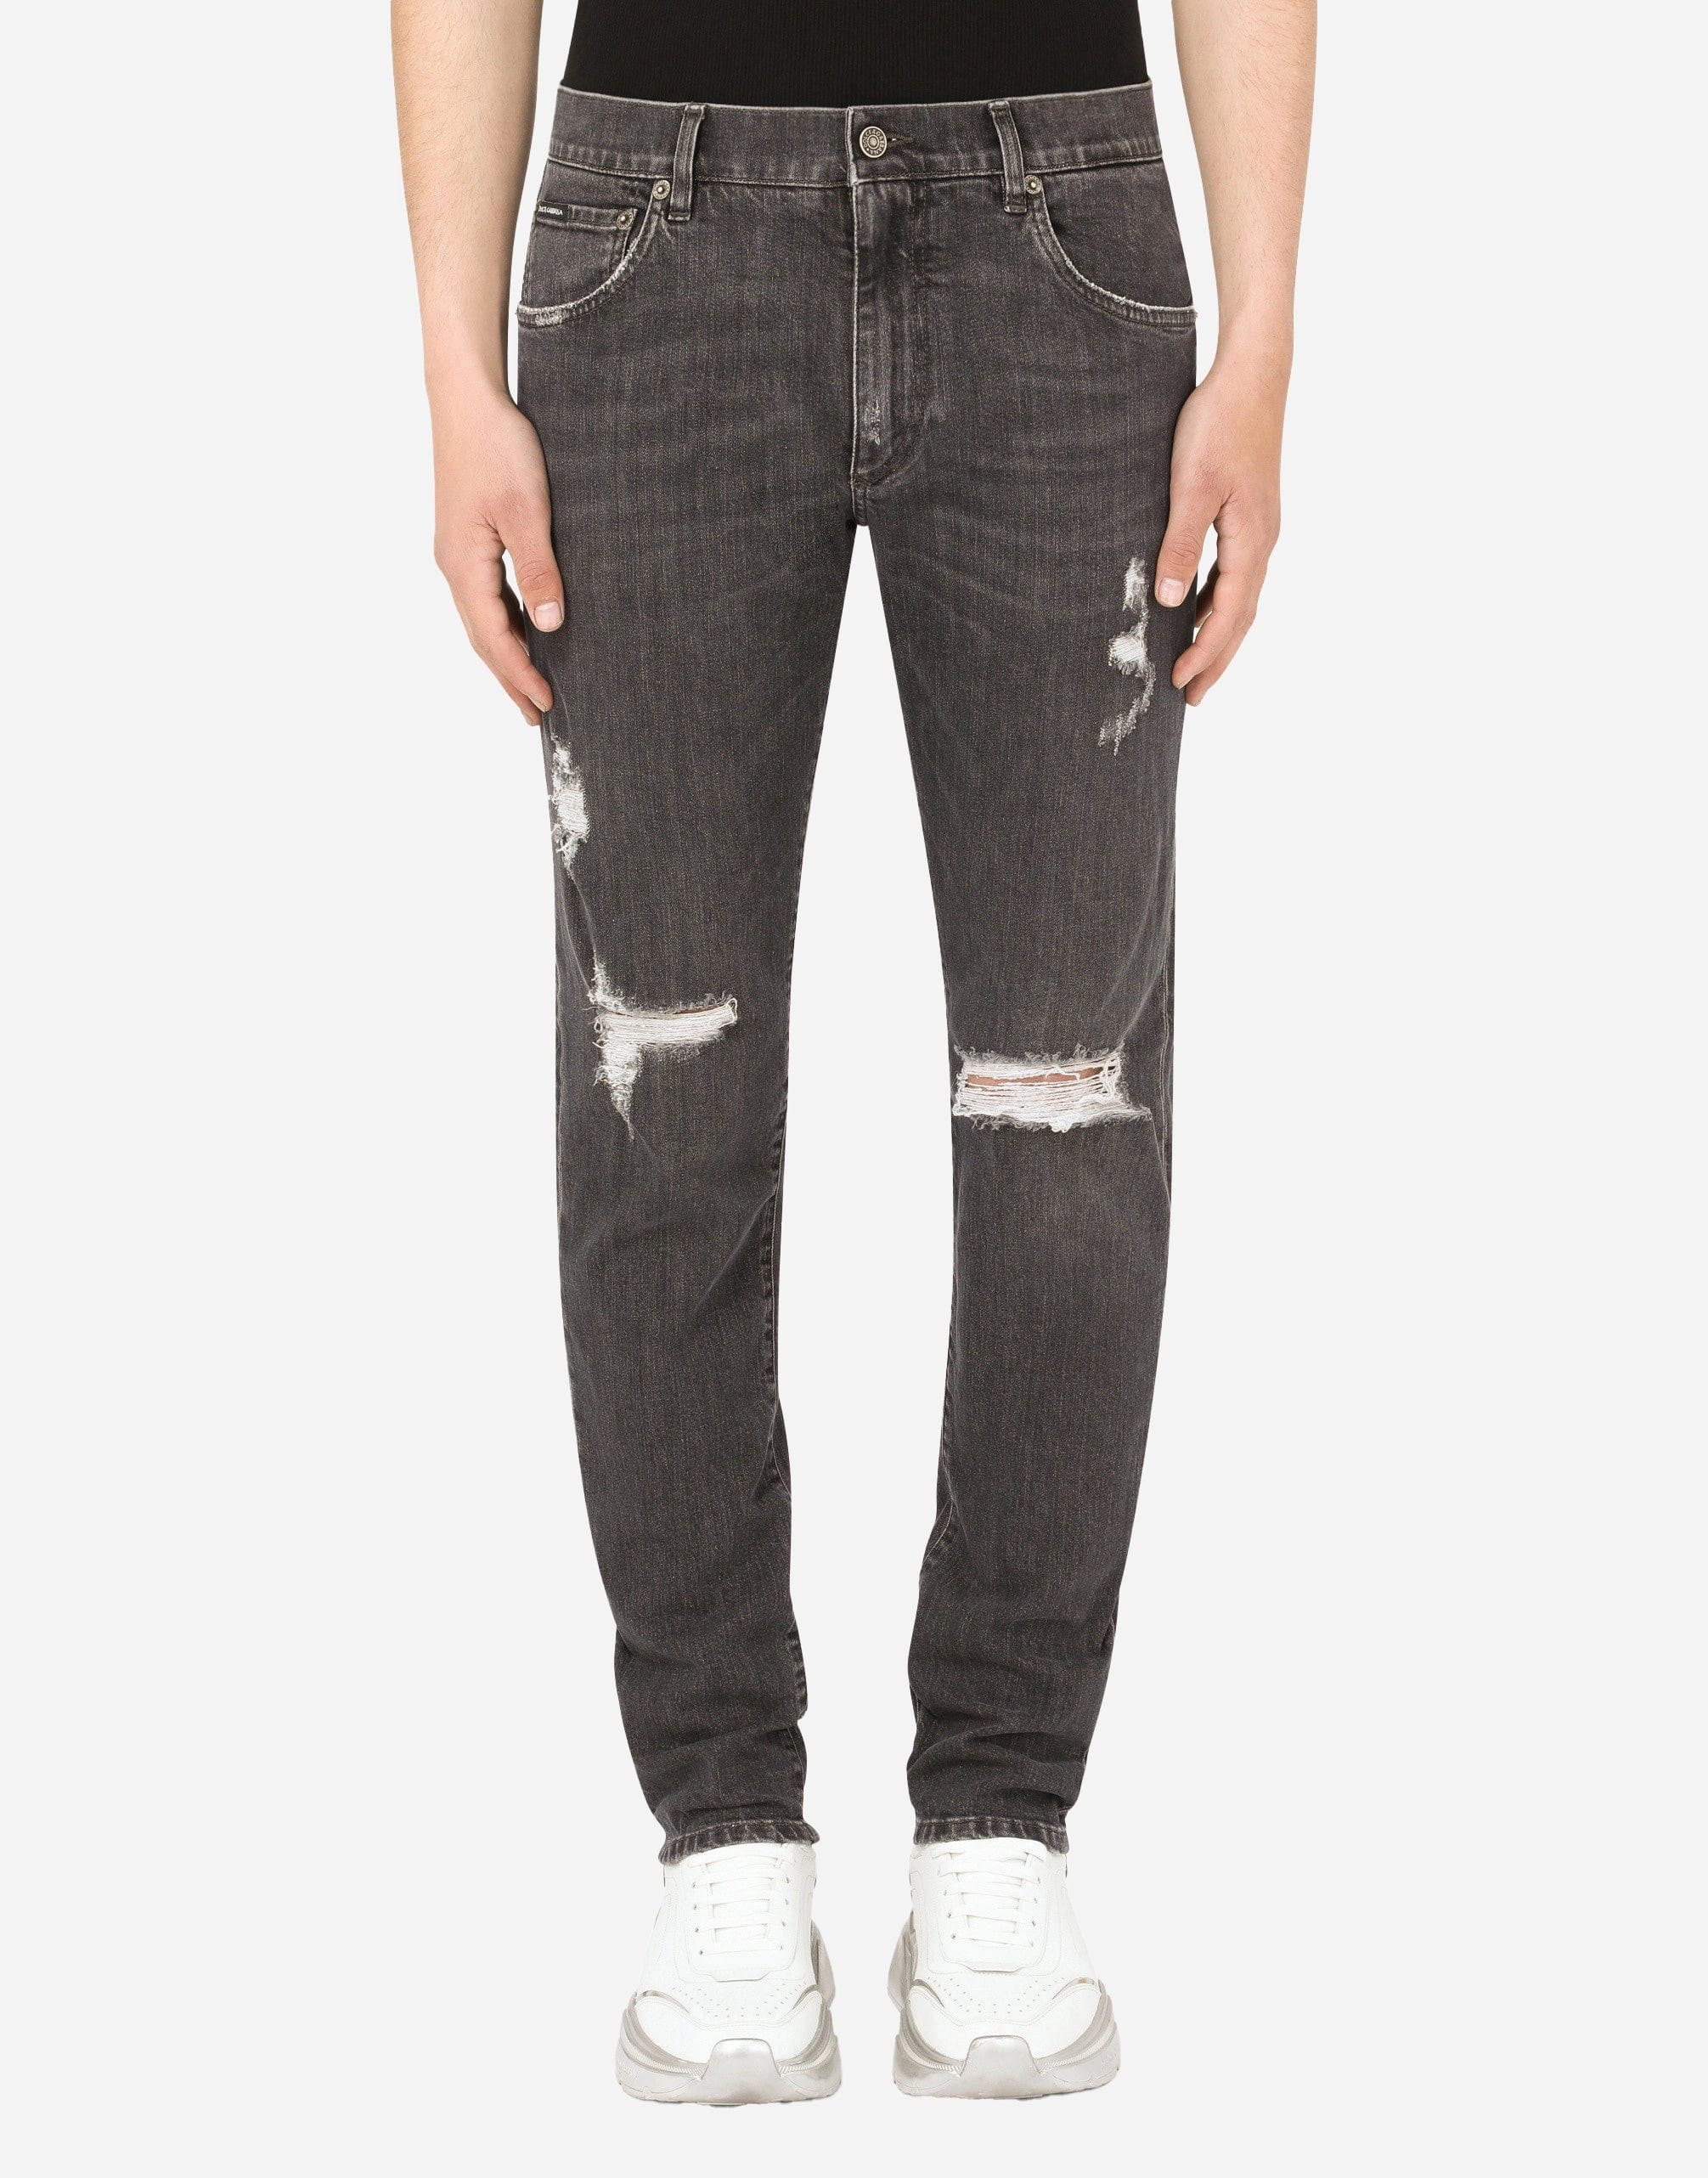 Jeans de algodón de ajuste delgado con rasgaduras